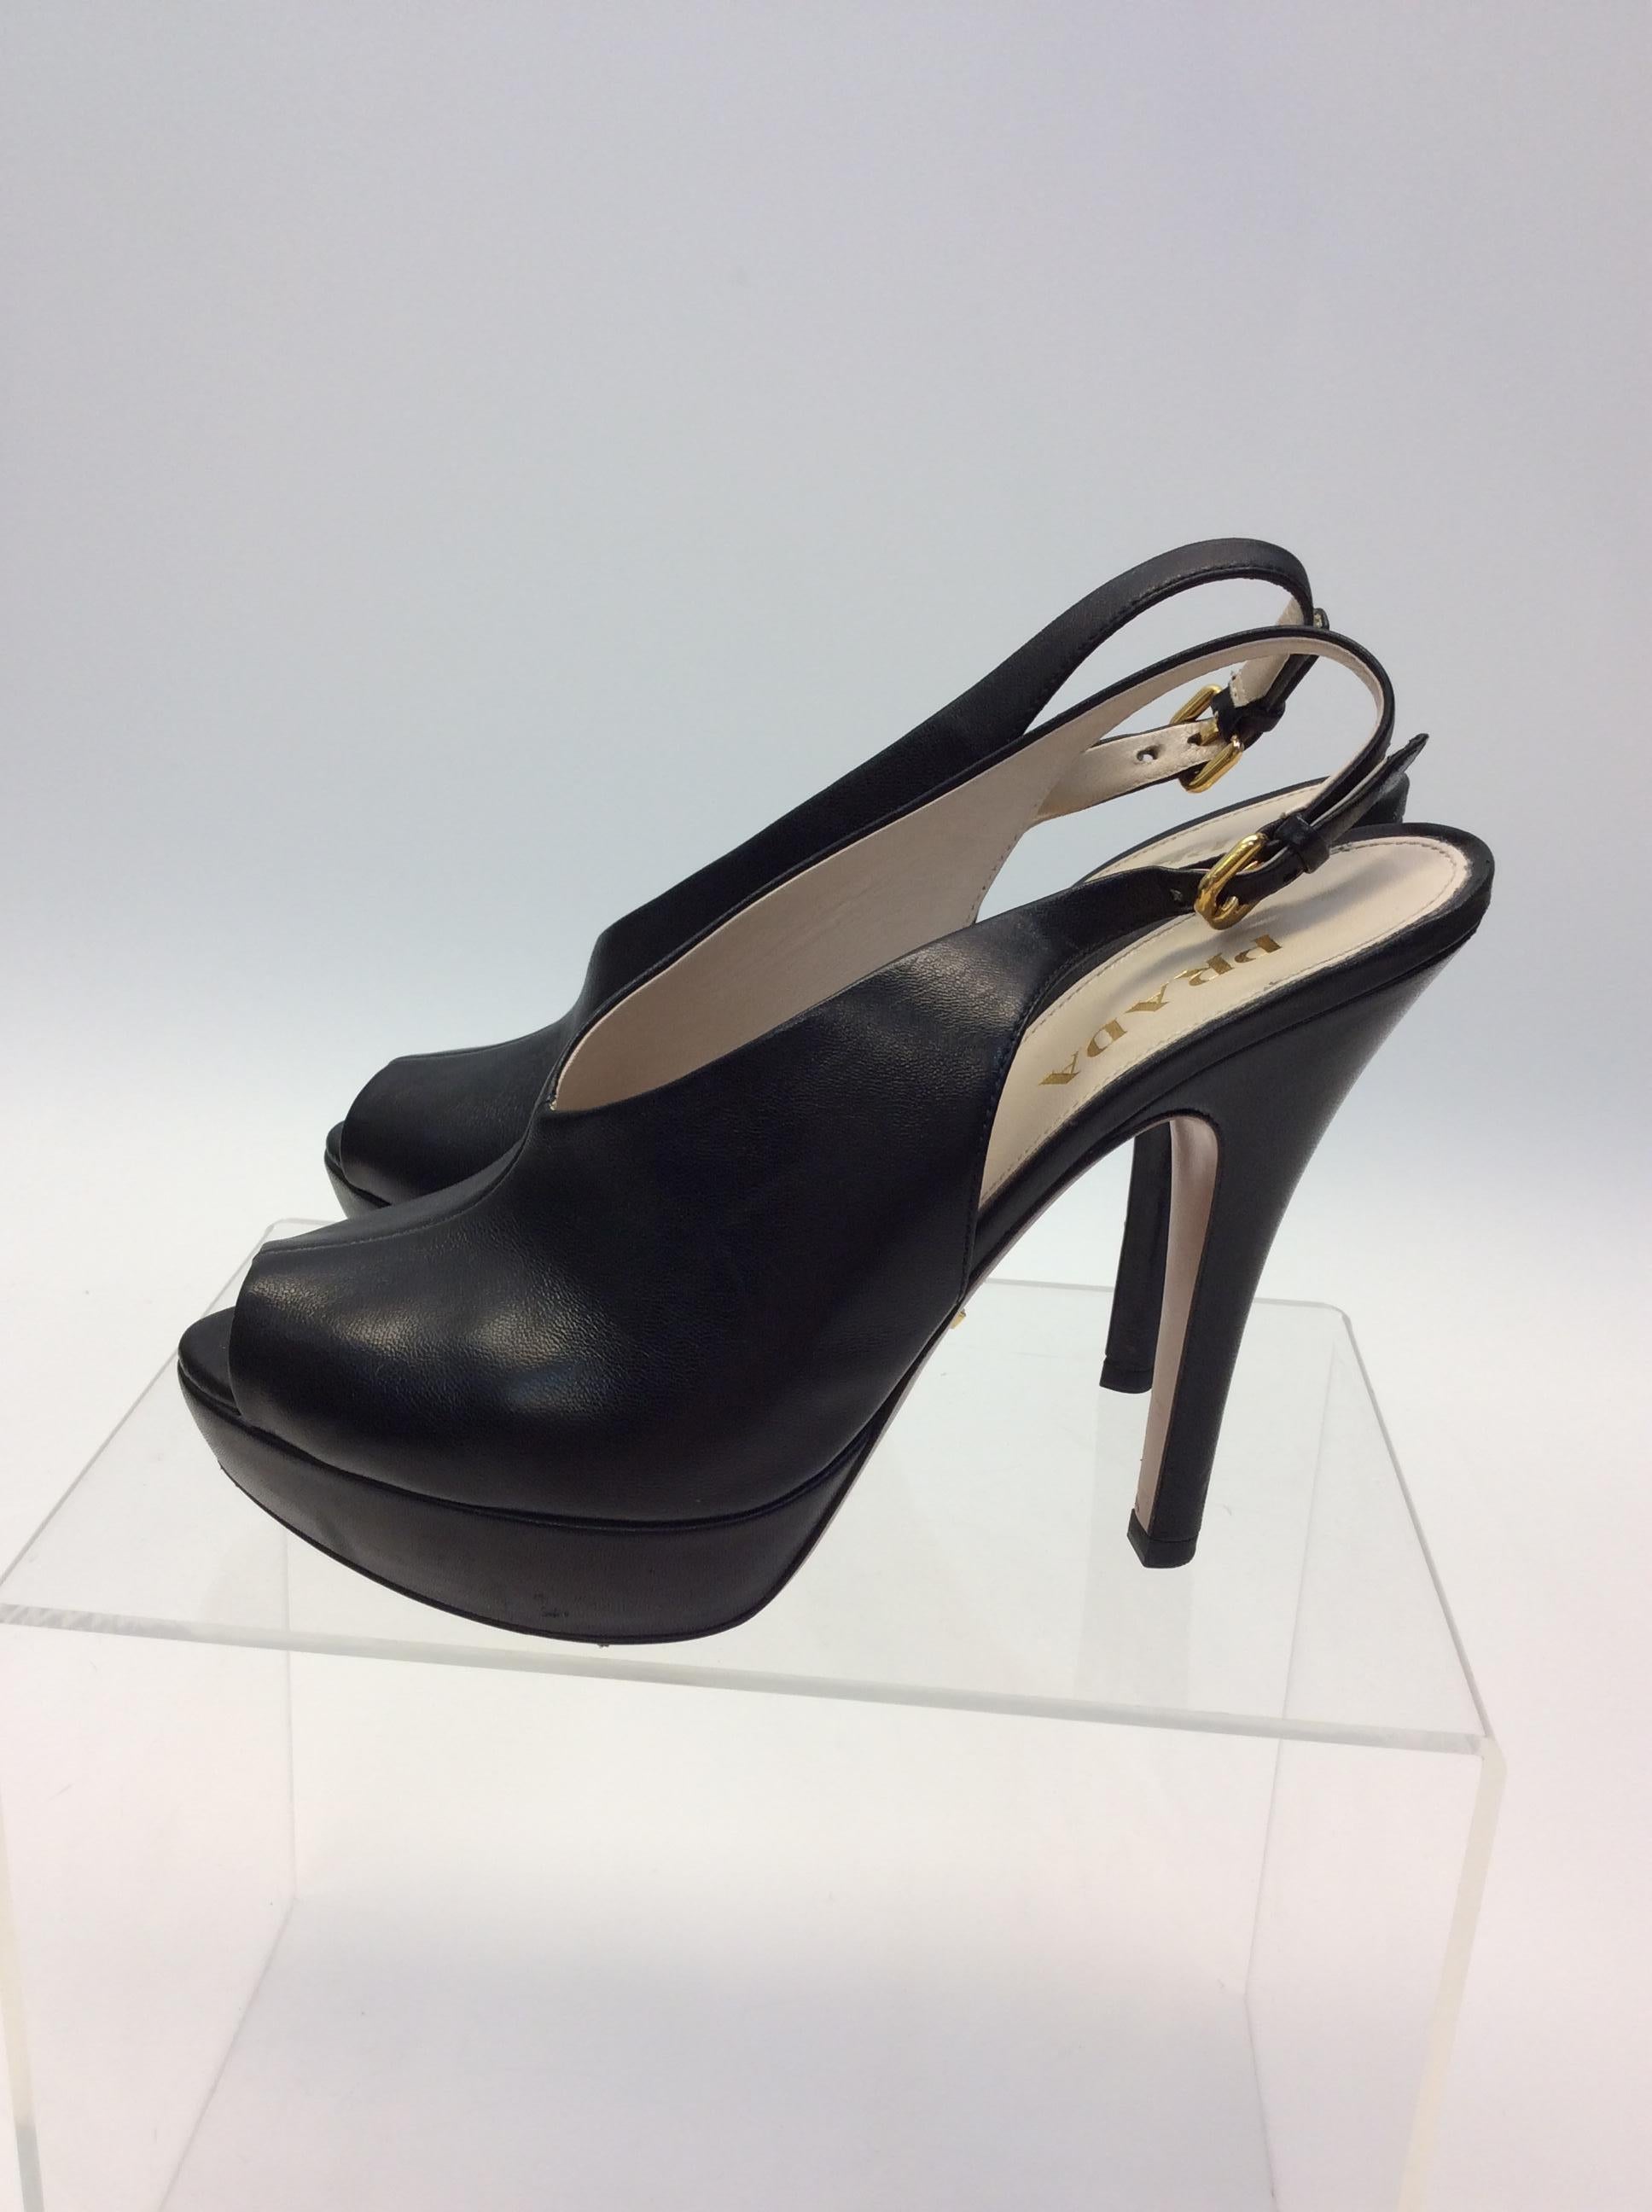 Prada Black Leather Peep Toe Heels
$199
Made in Italy
Leather
Size 38
Platform 1